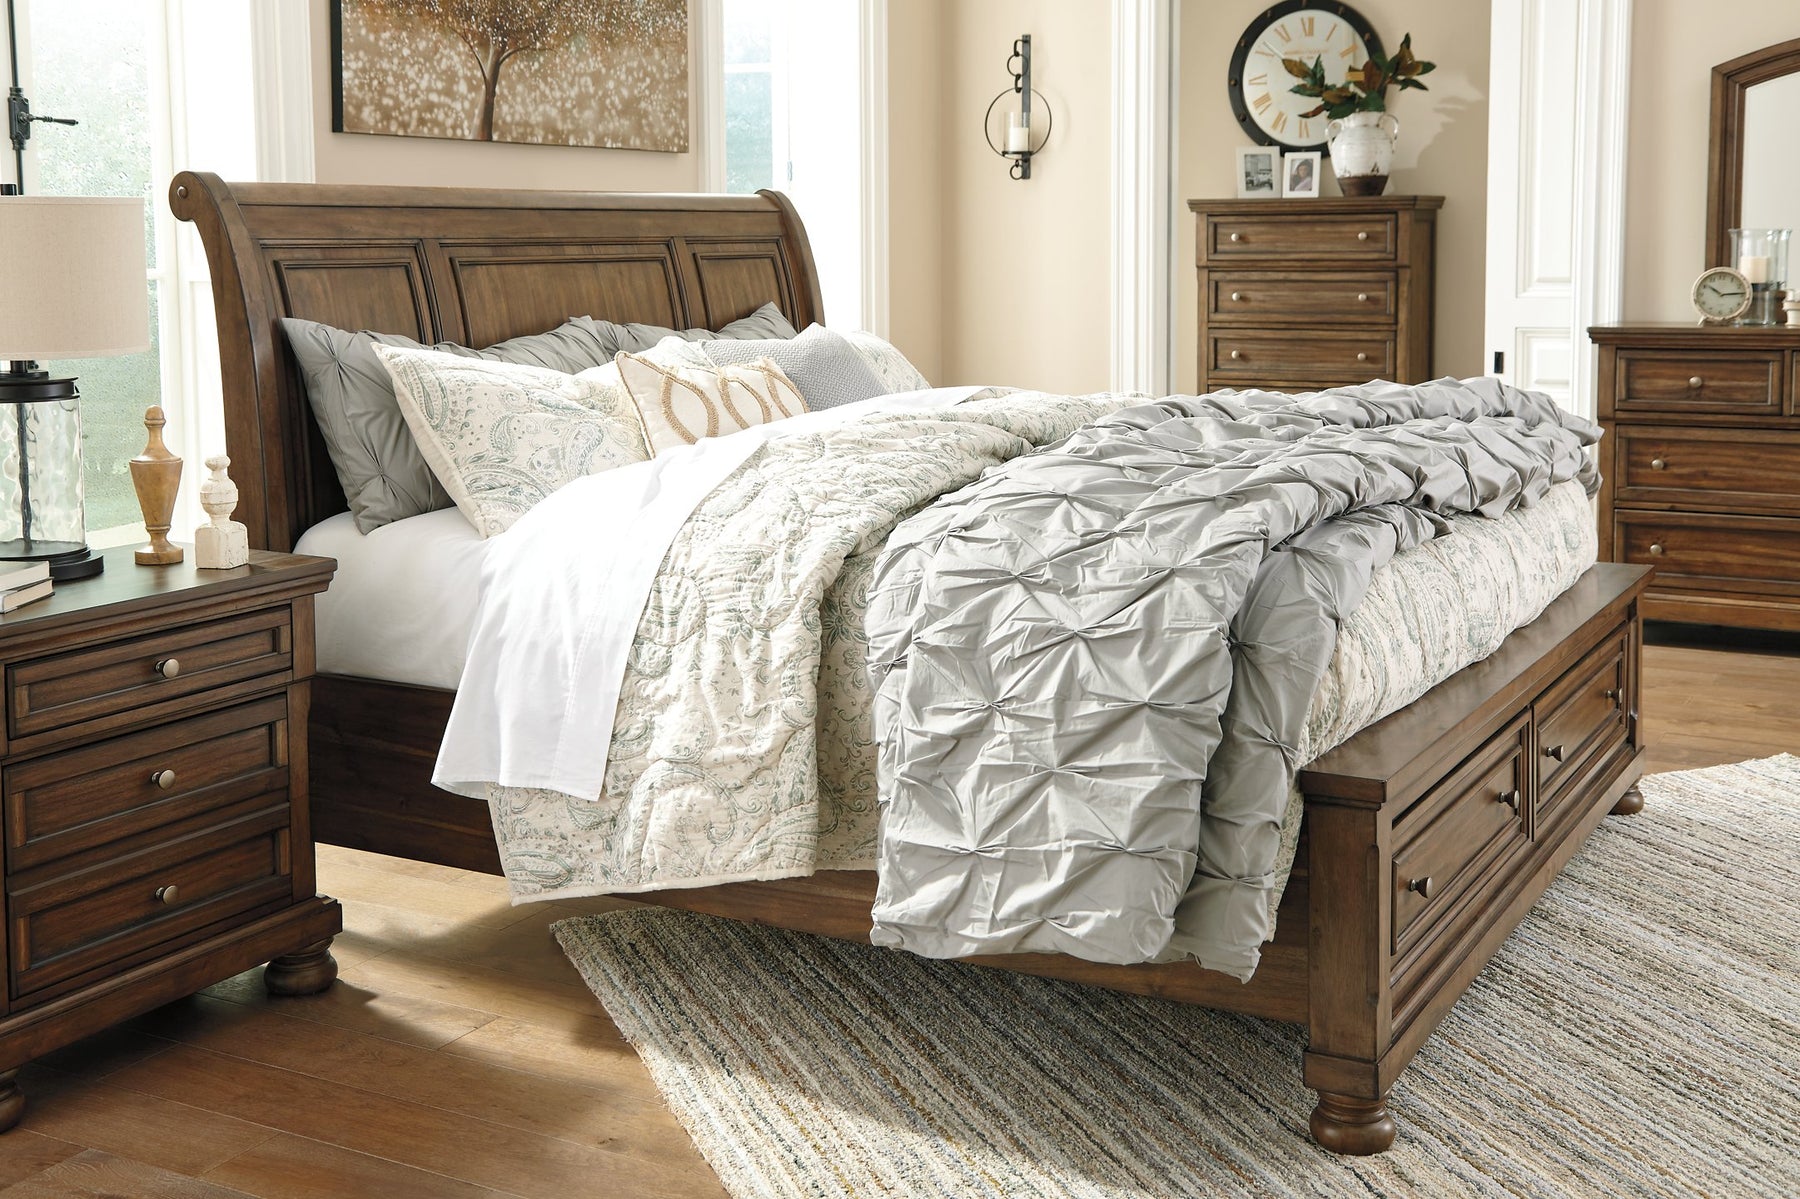 Flynnter Bed with 2 Storage Drawers - Half Price Furniture